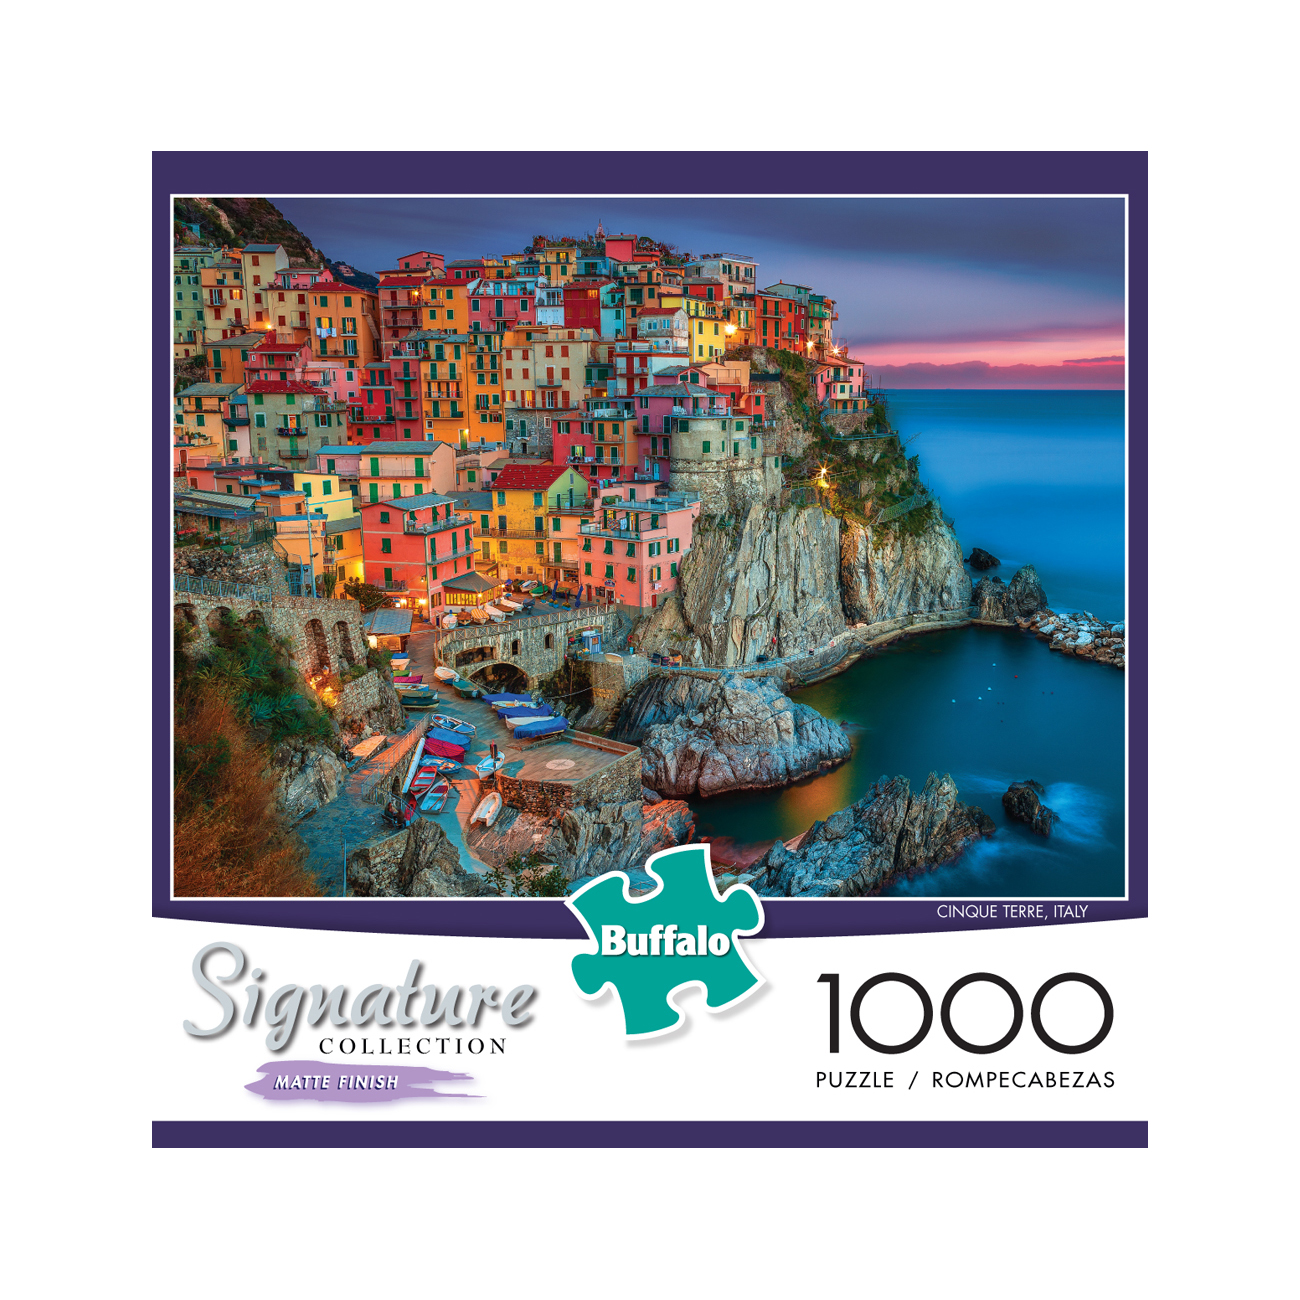 Buffalo Games & Puzzles Signature Collection - Cinque Terre, Italy: 1000 Pcs